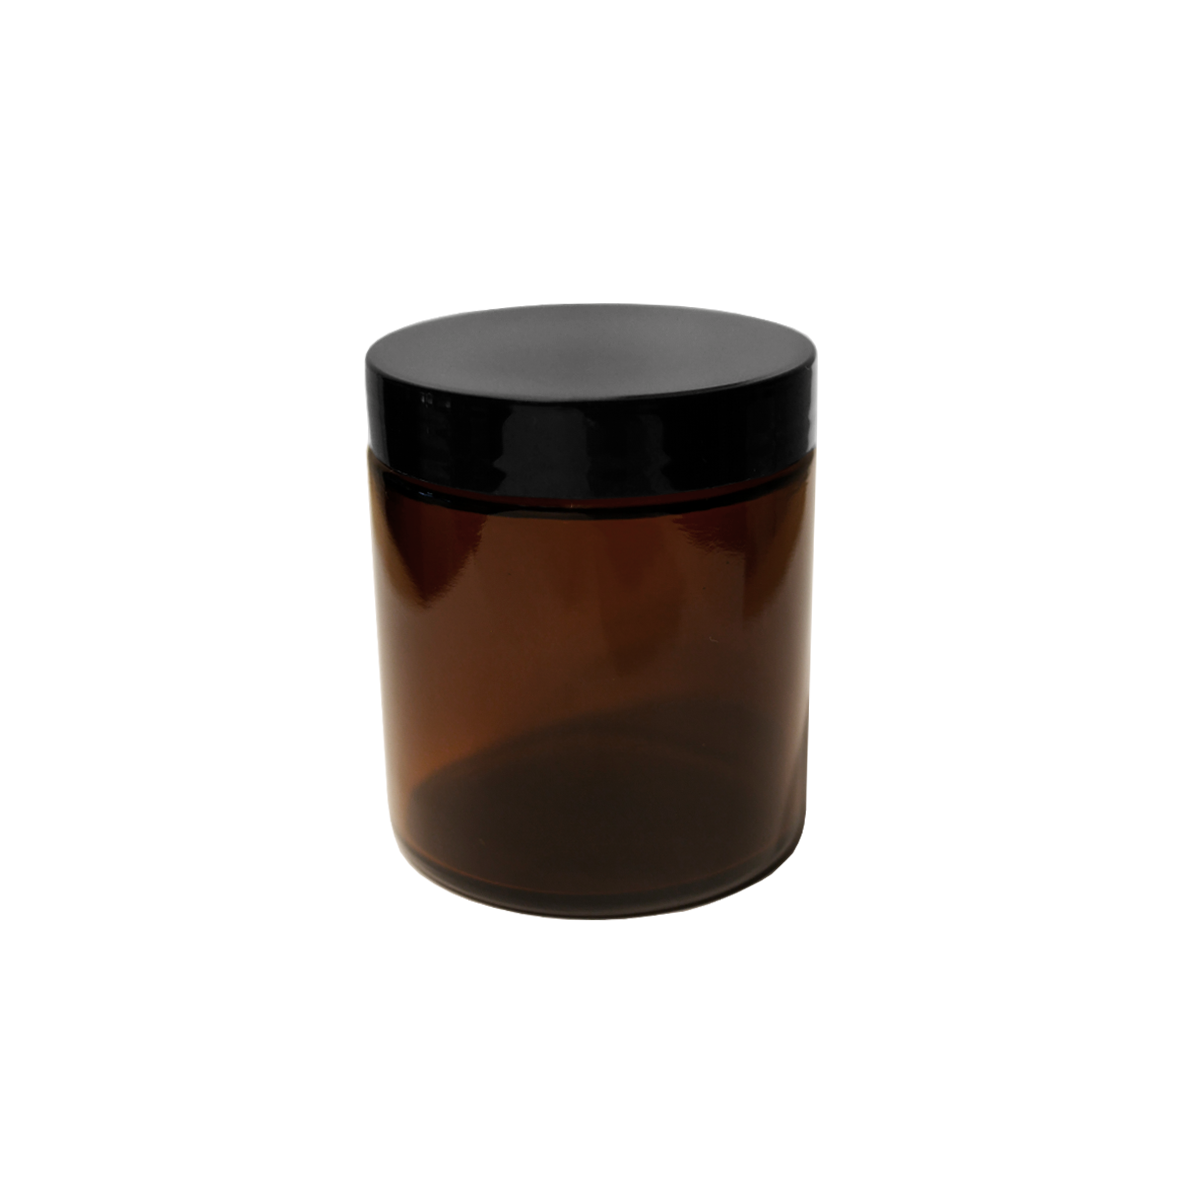 4oz amber jar with a black twist off lid.